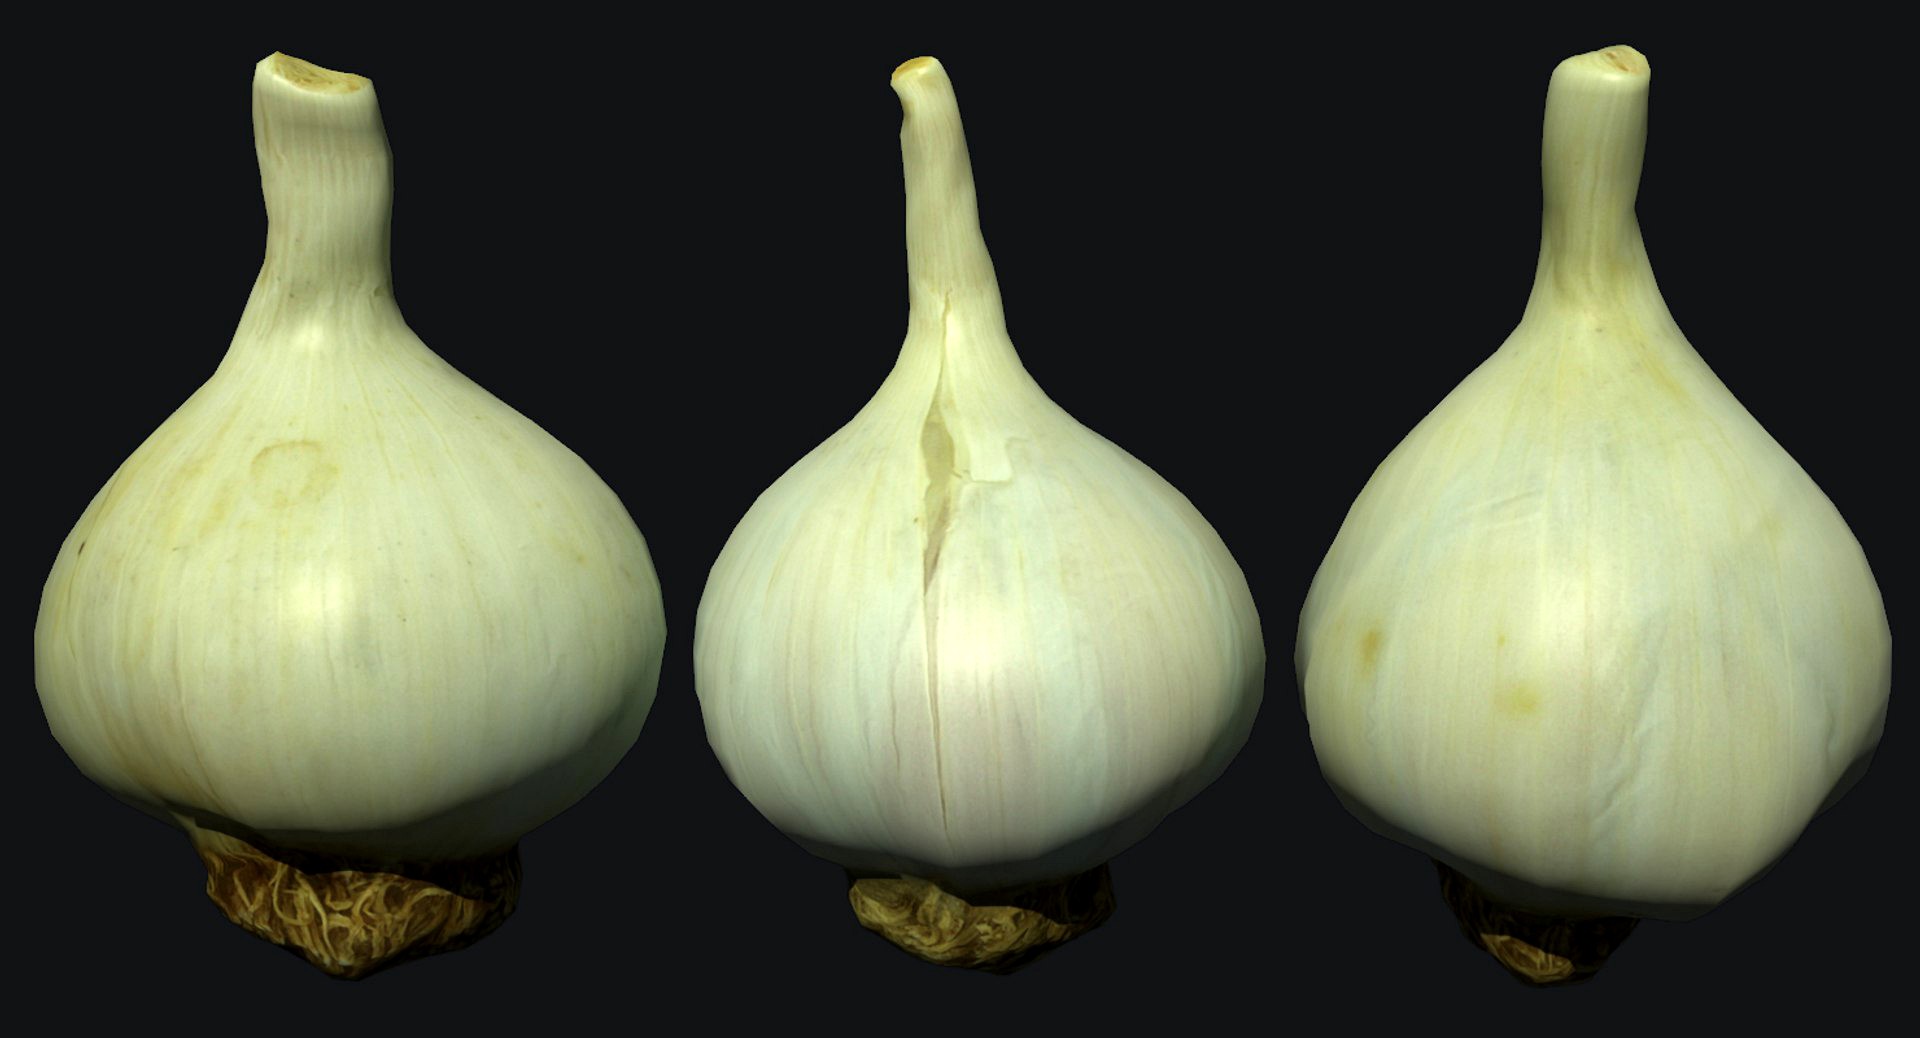 Garlic Scan 01